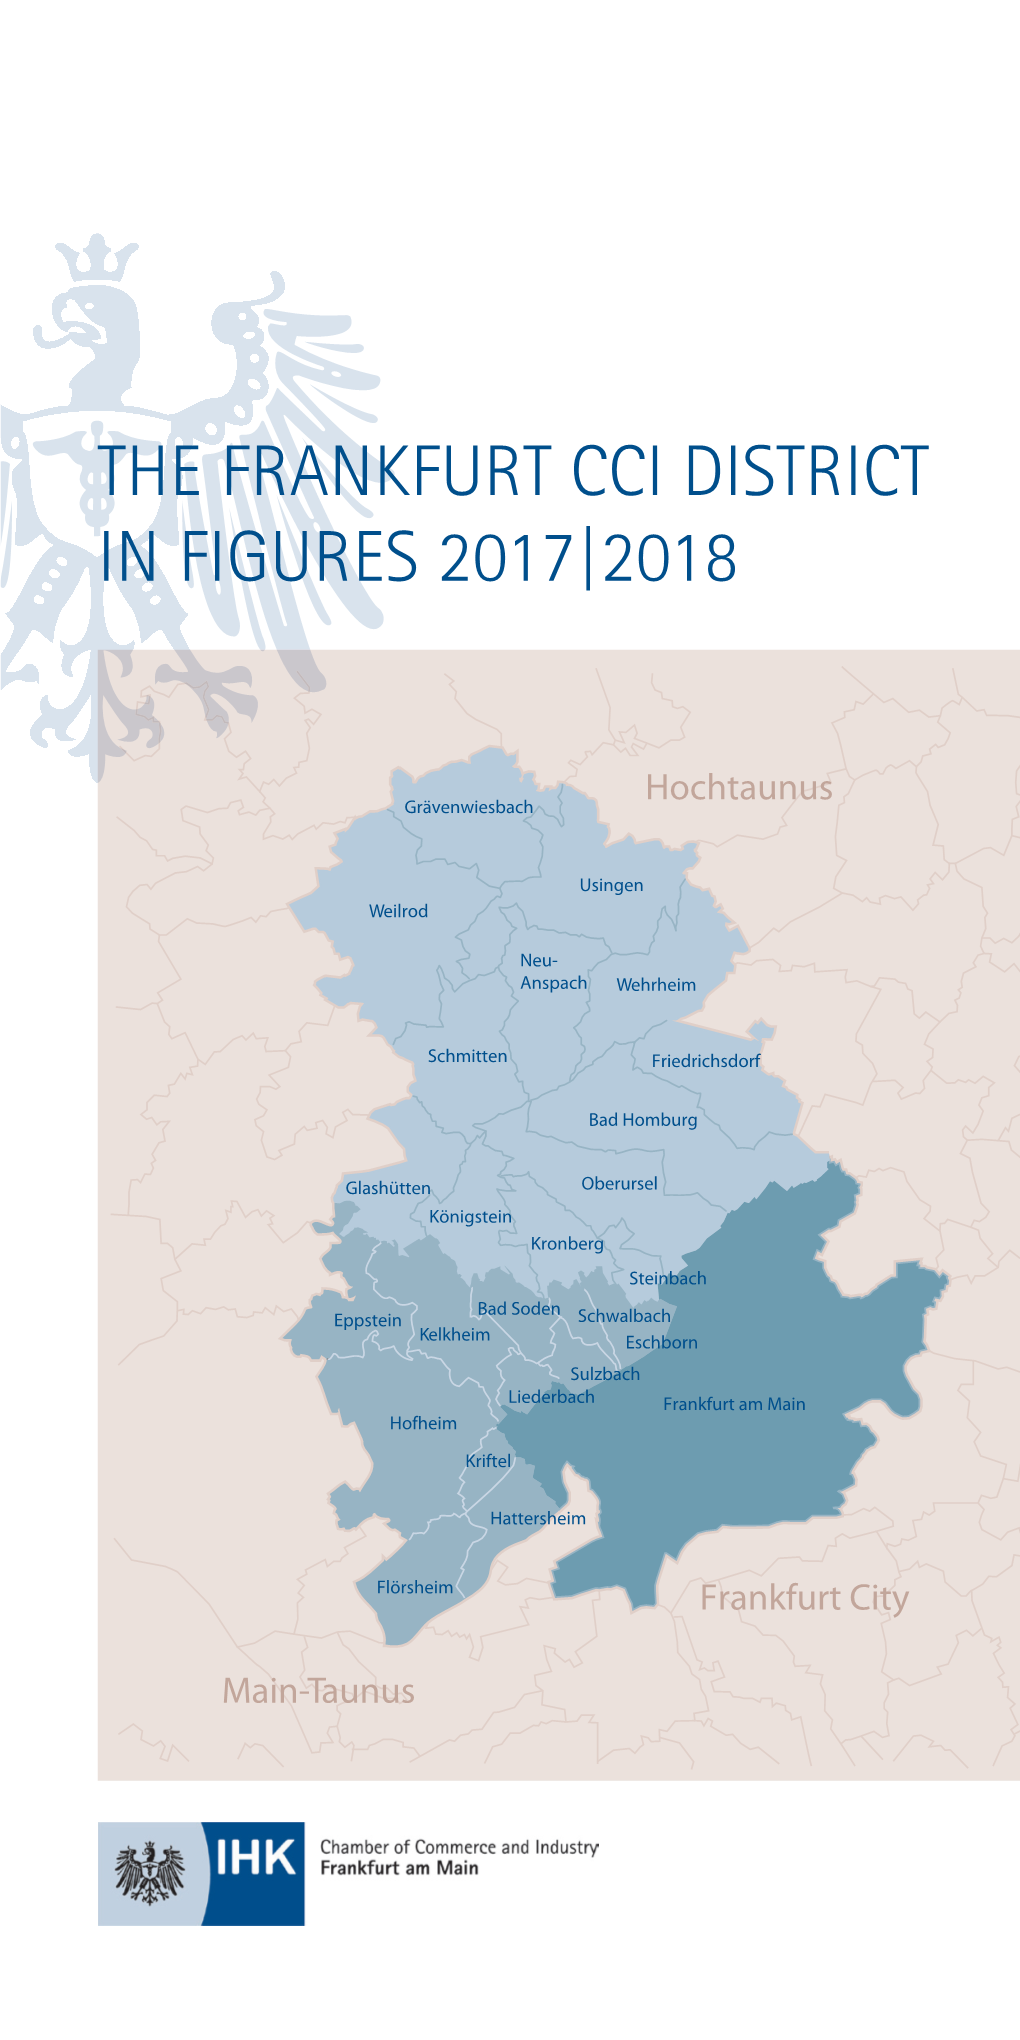 The Frankfurt Cci District in Figures 2017|2018